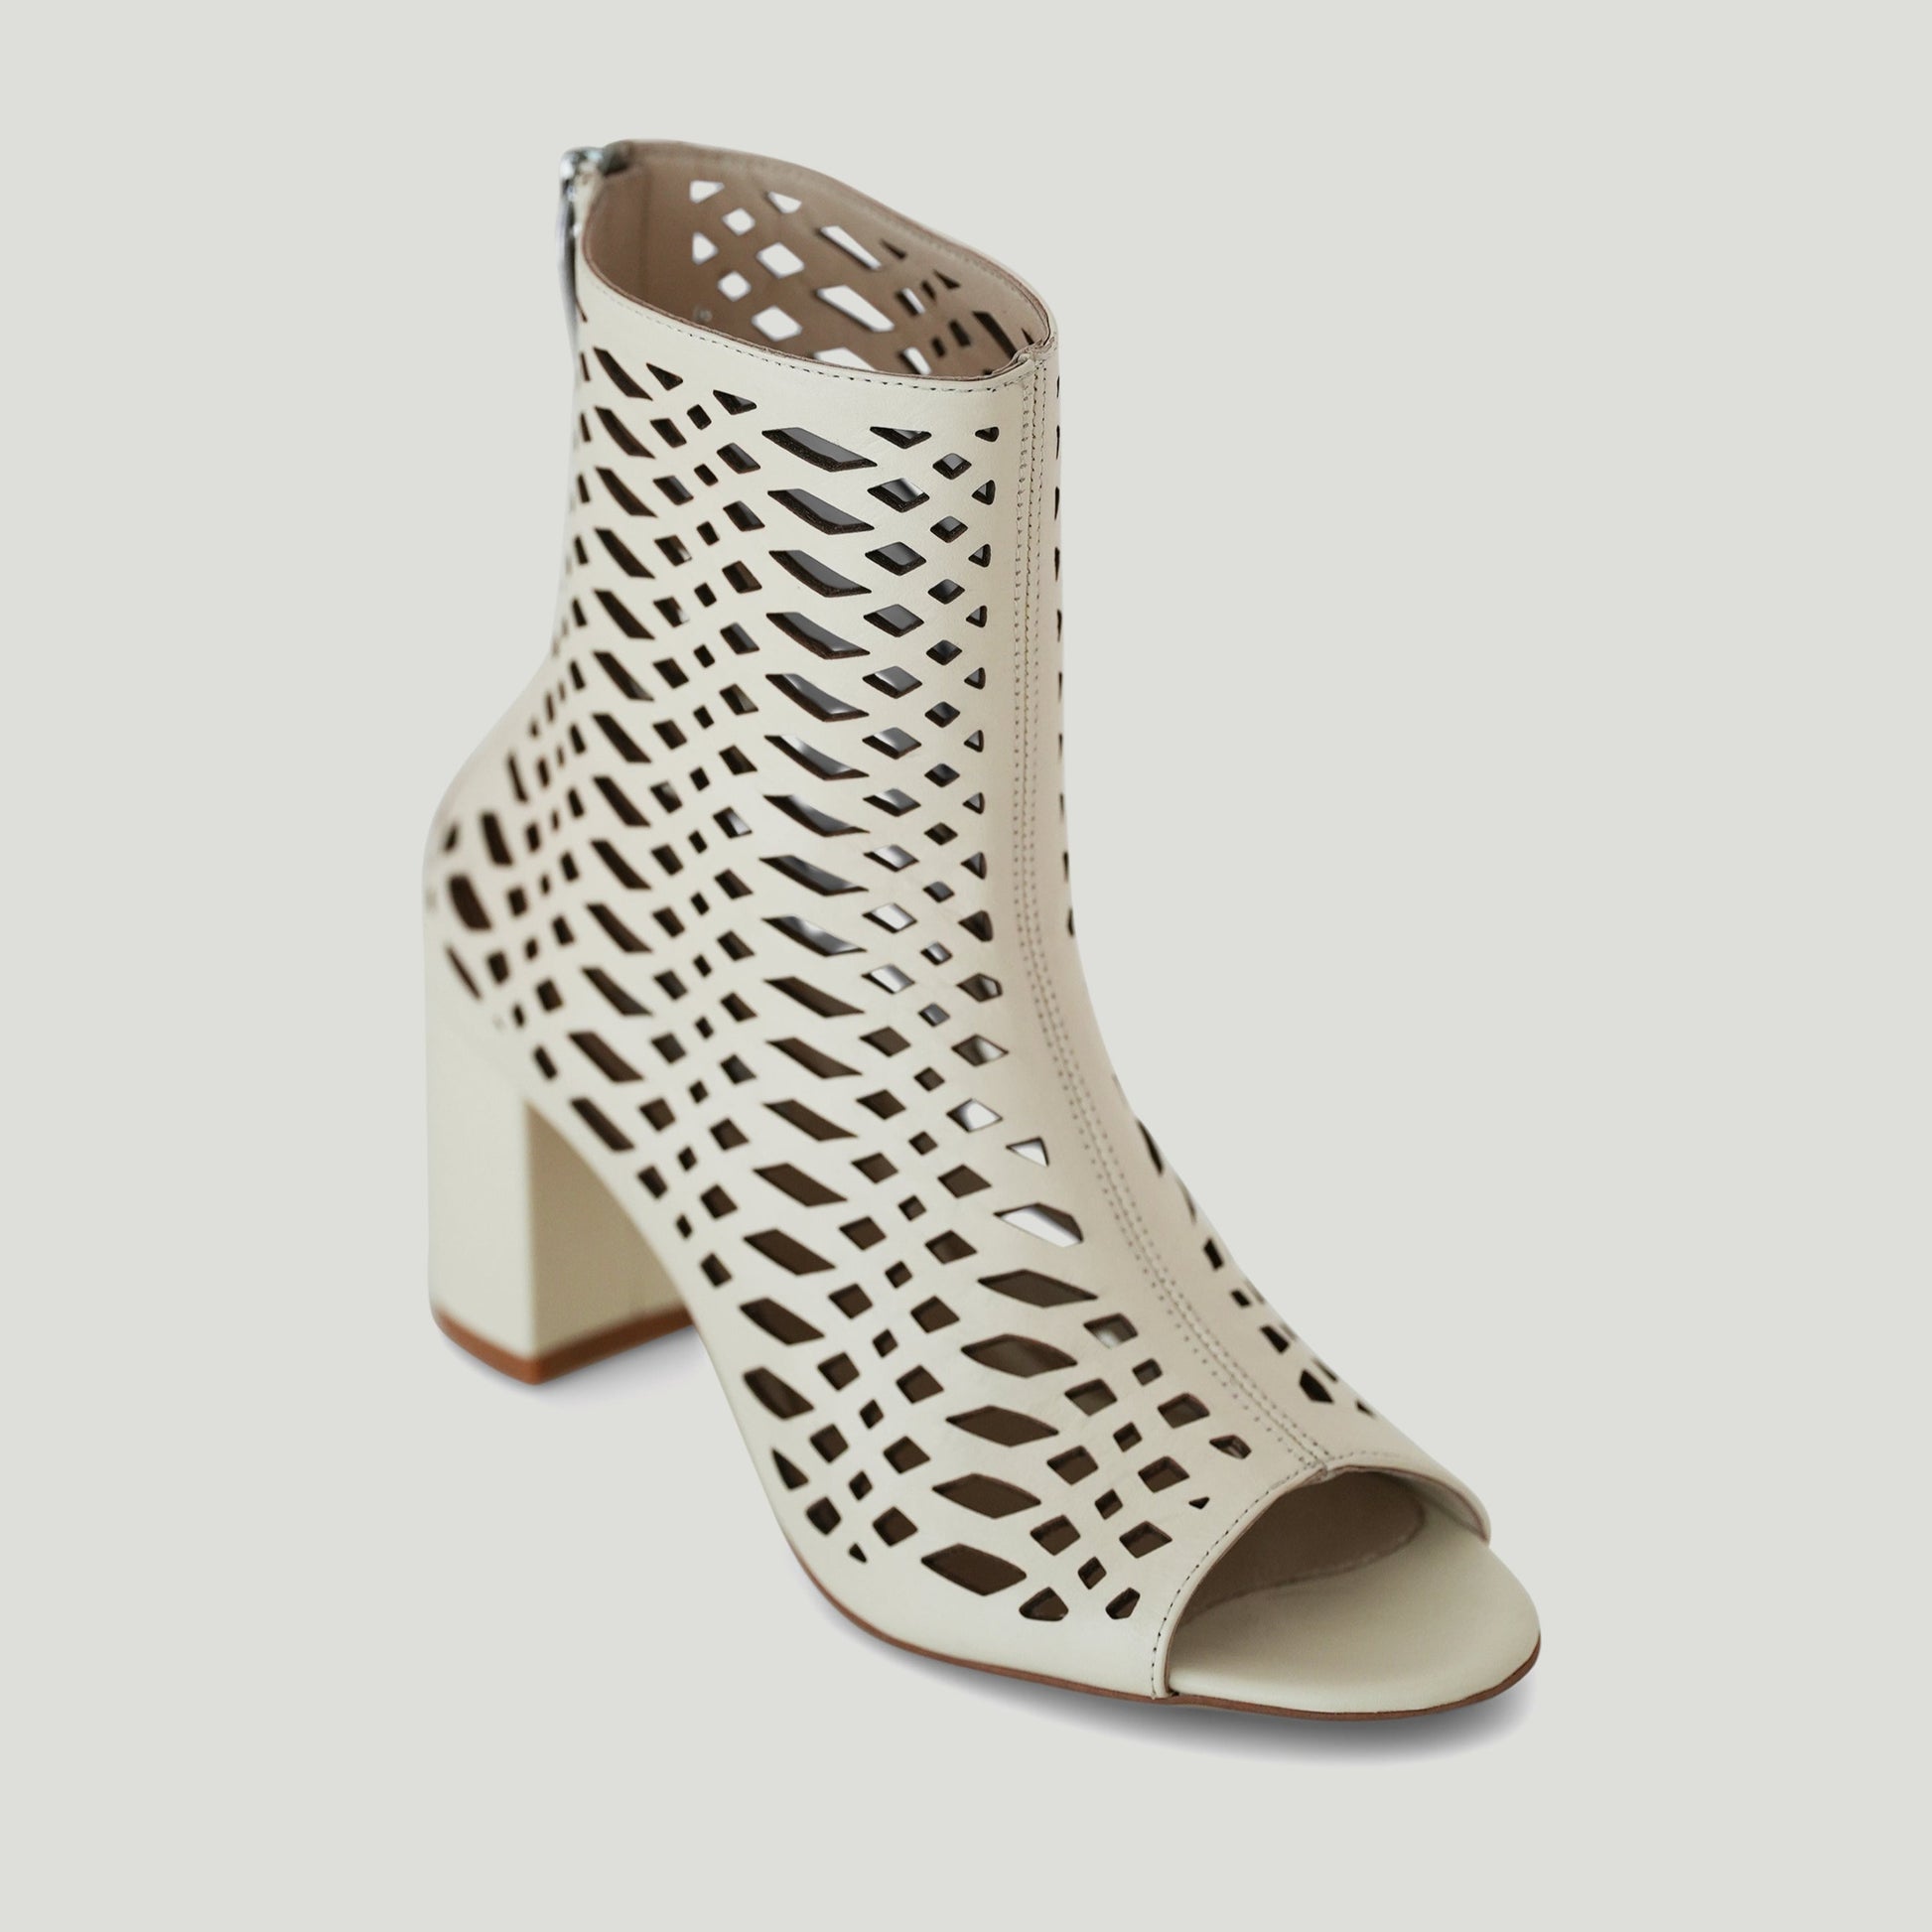 Kayan cream heel - Heels - kuwait - Ksa- shoes